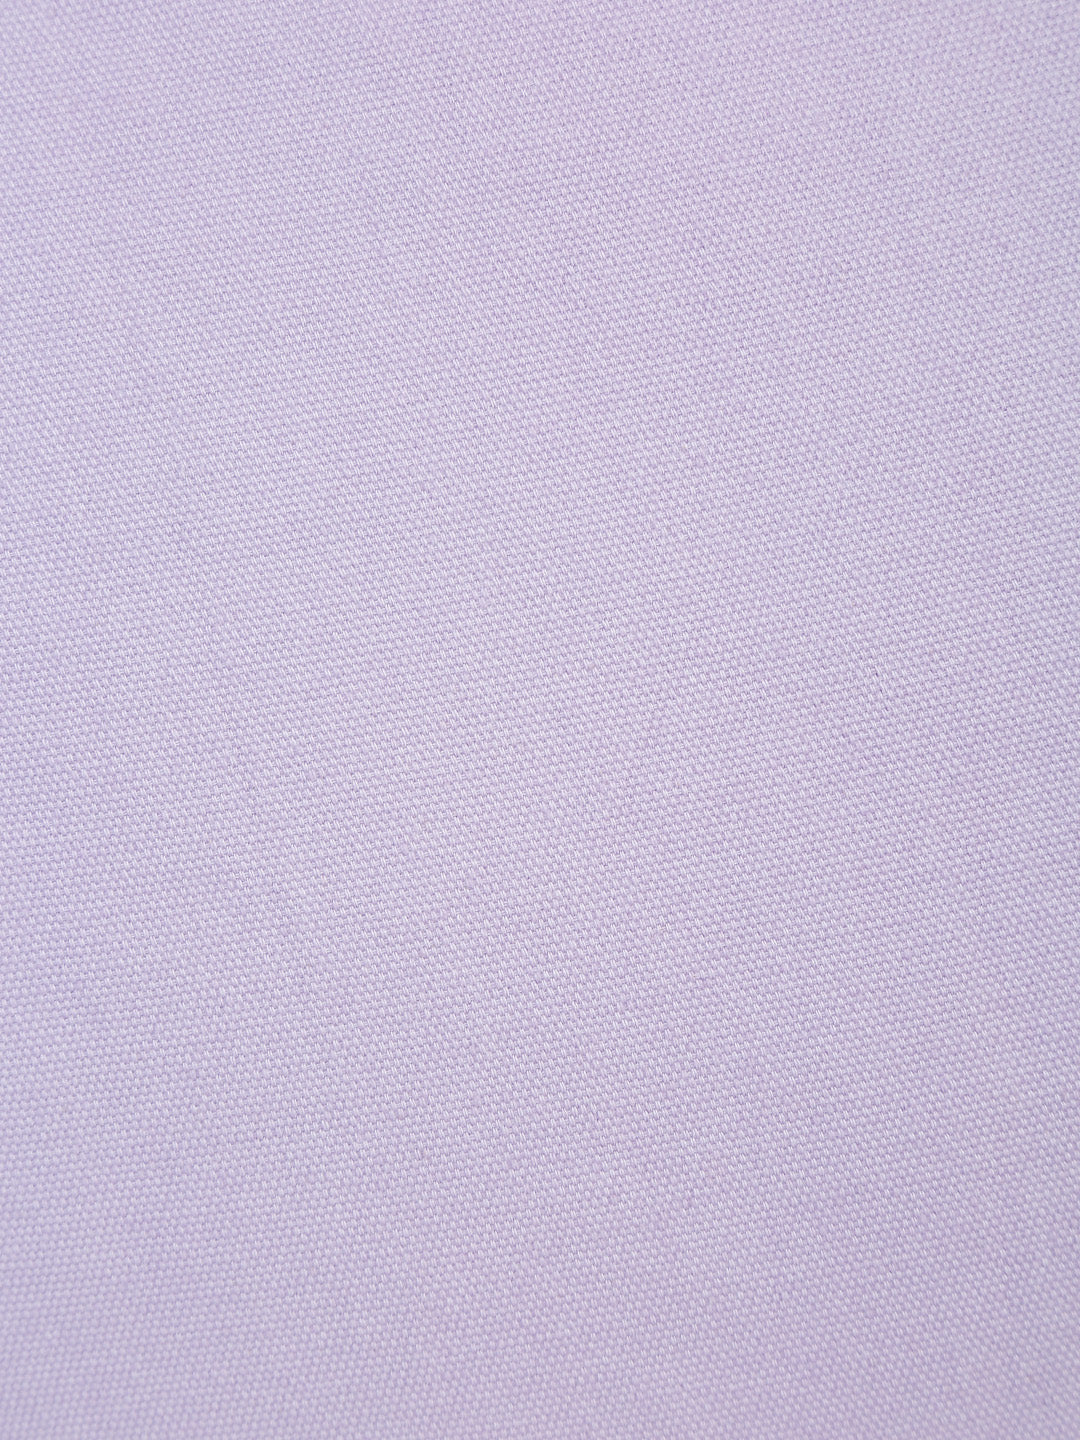 Purple Cotton XXL Bean Bag Cover